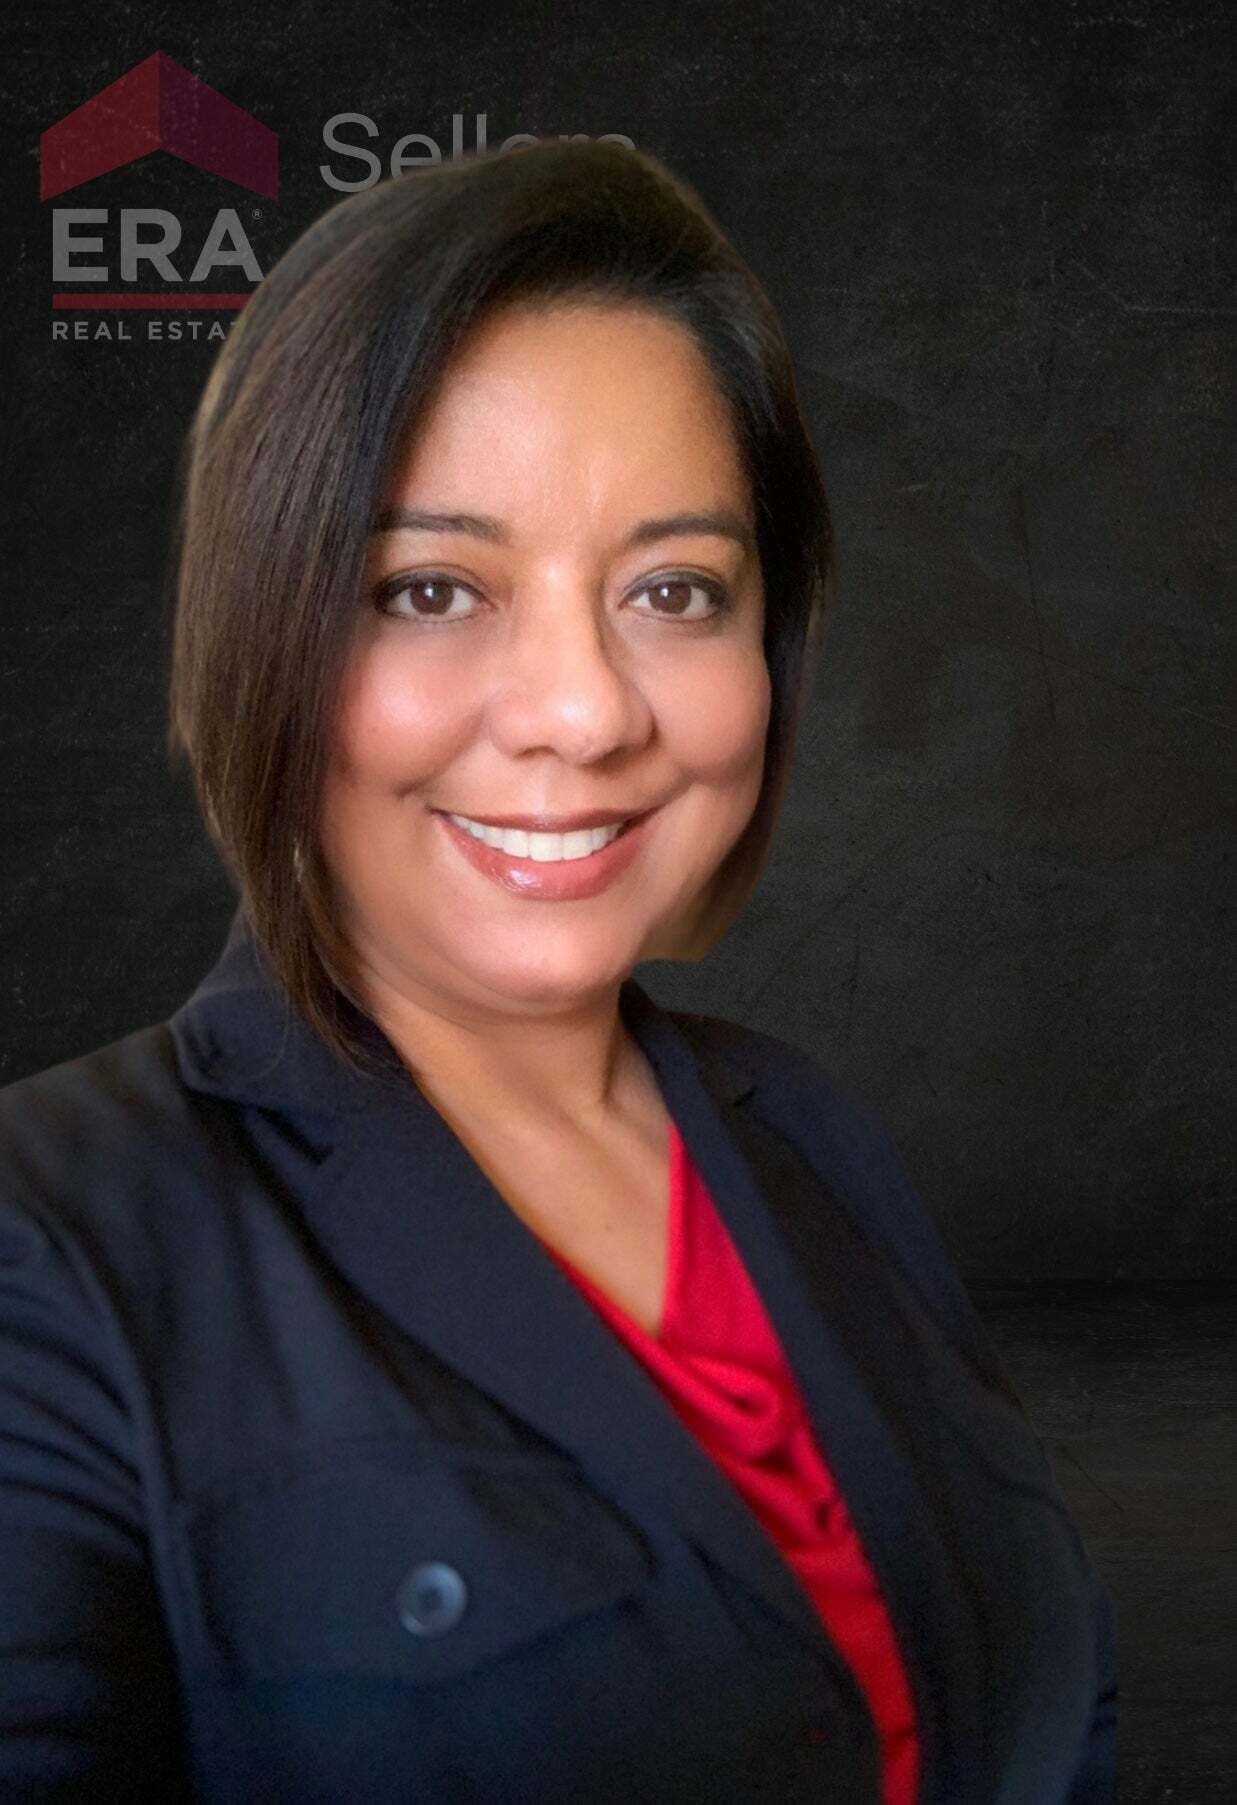 Yvette Robinson, Real Estate Salesperson in El Paso, ERA Sellers & Buyers Real Estate